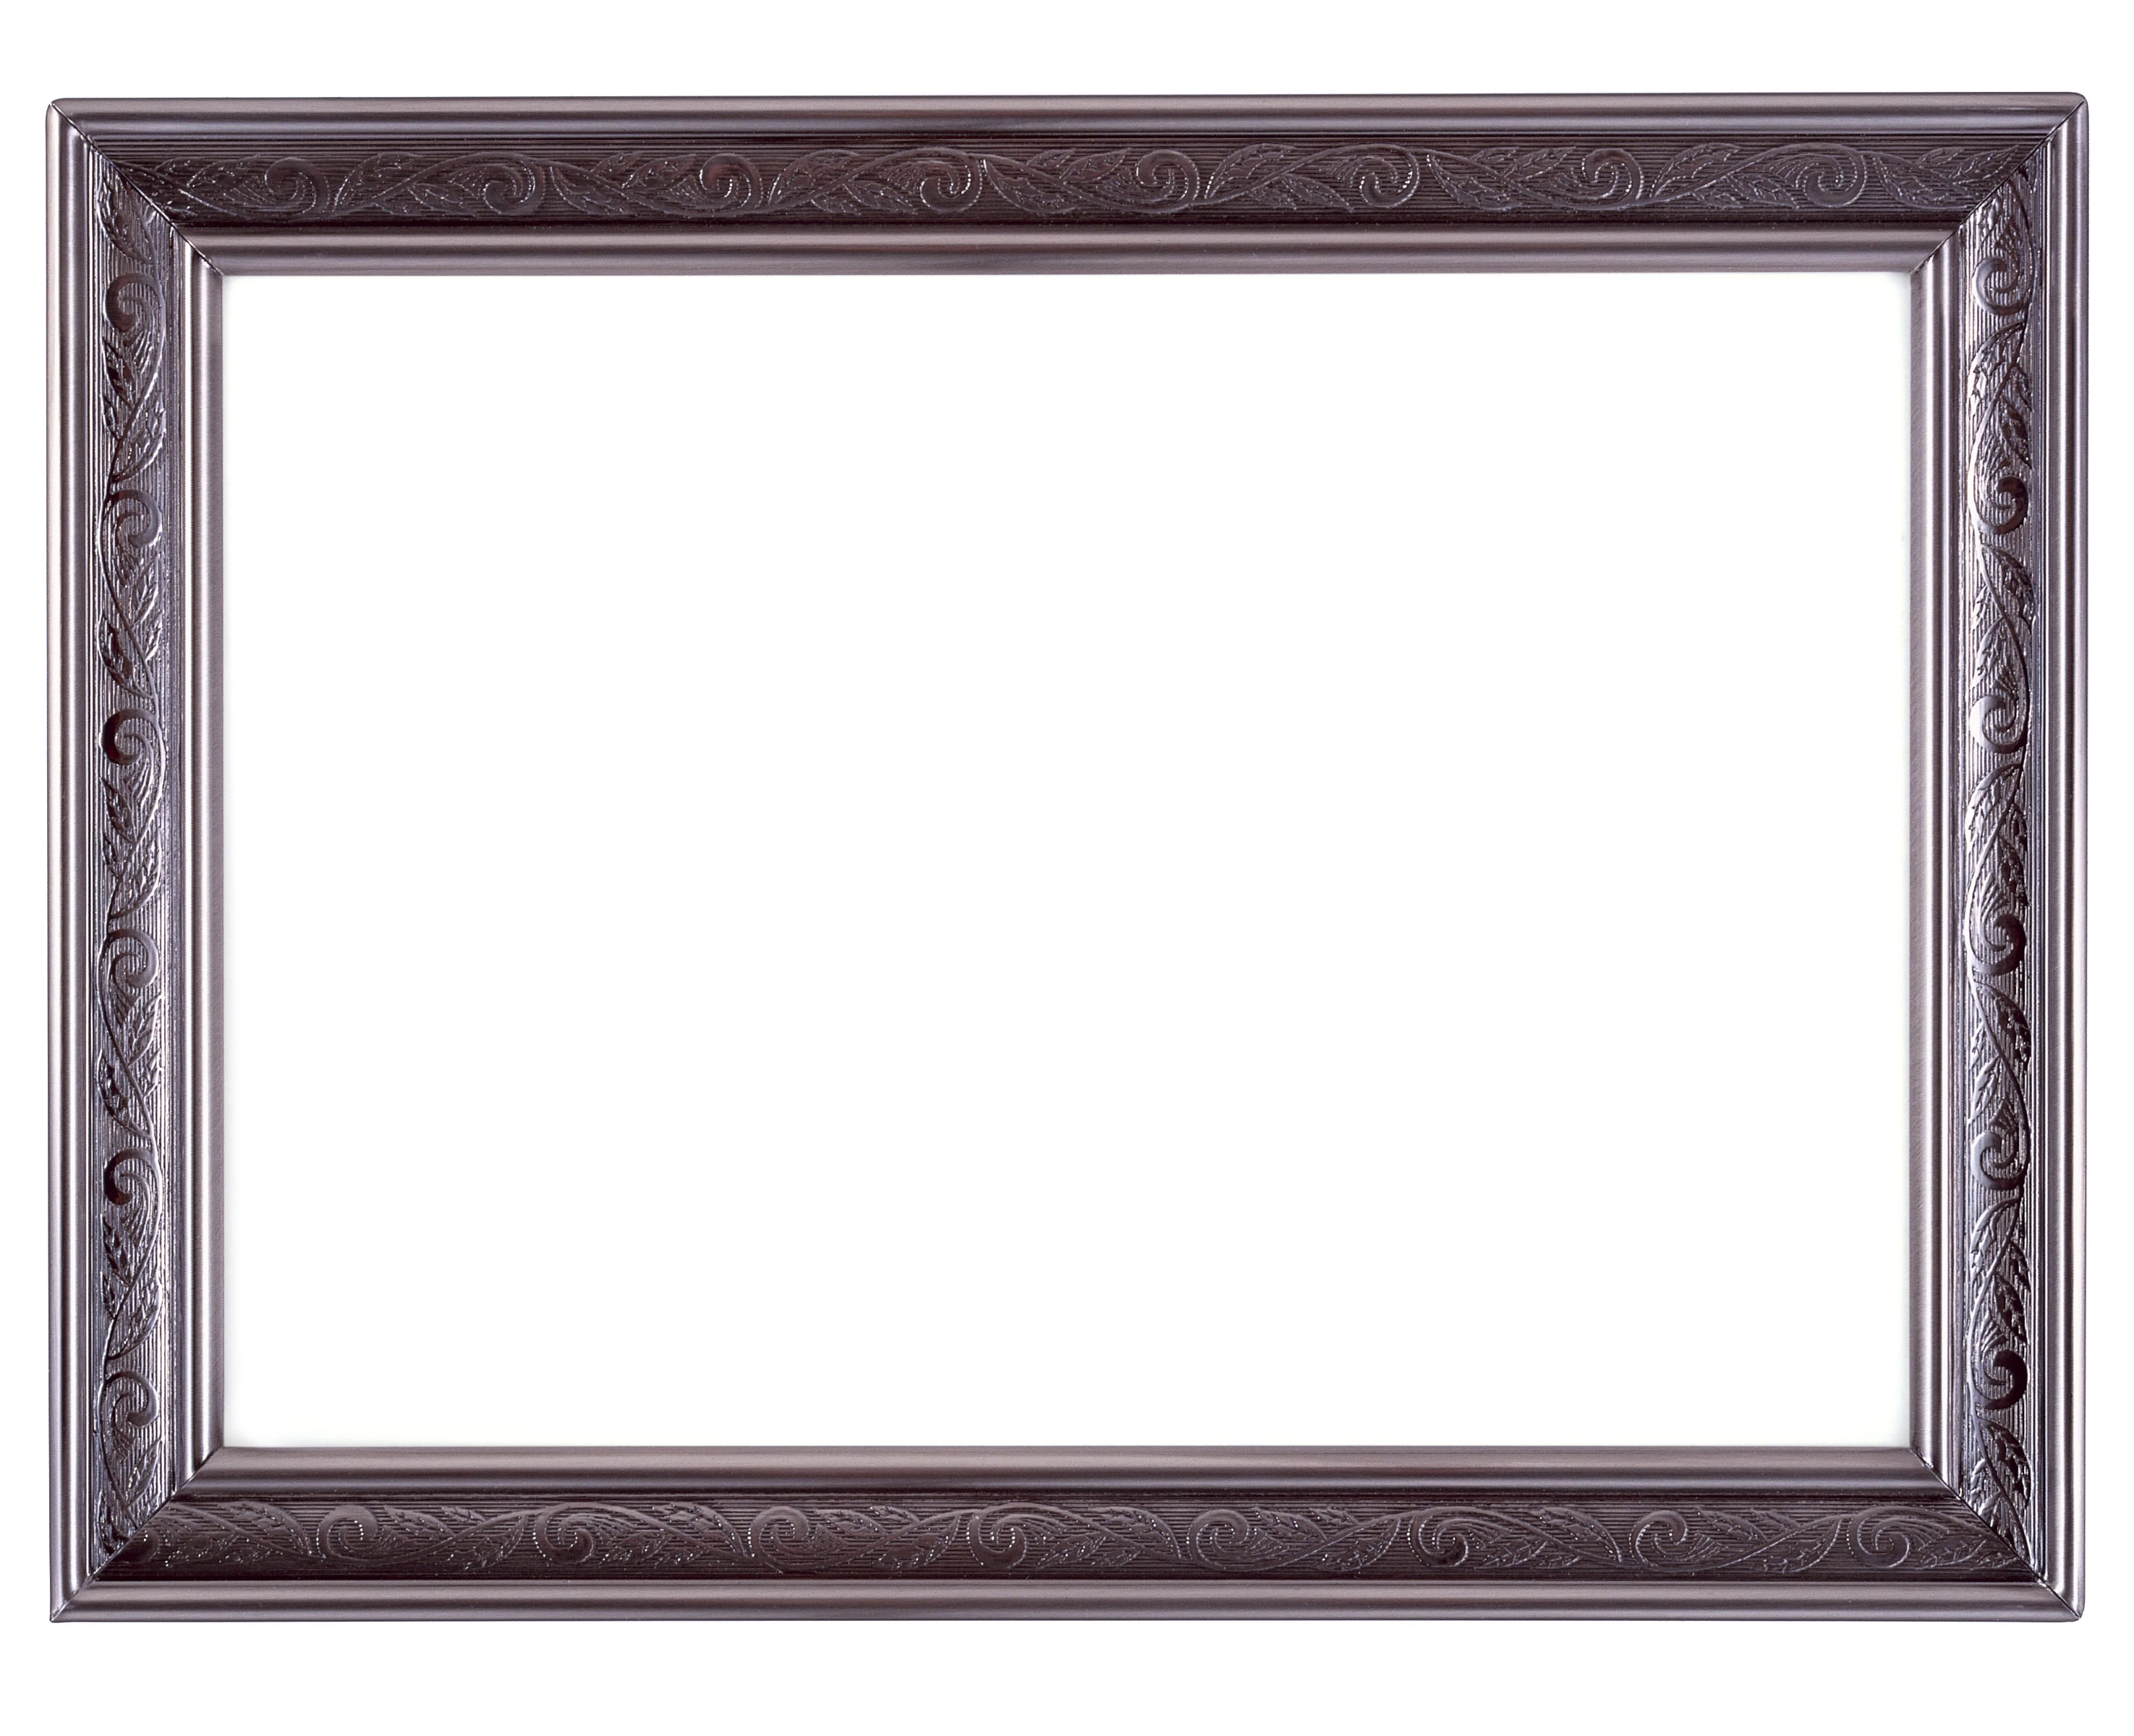 Polyurethane mirror frames, 18x24 frame, photo frames uk, photo frame sizes, christmas frames